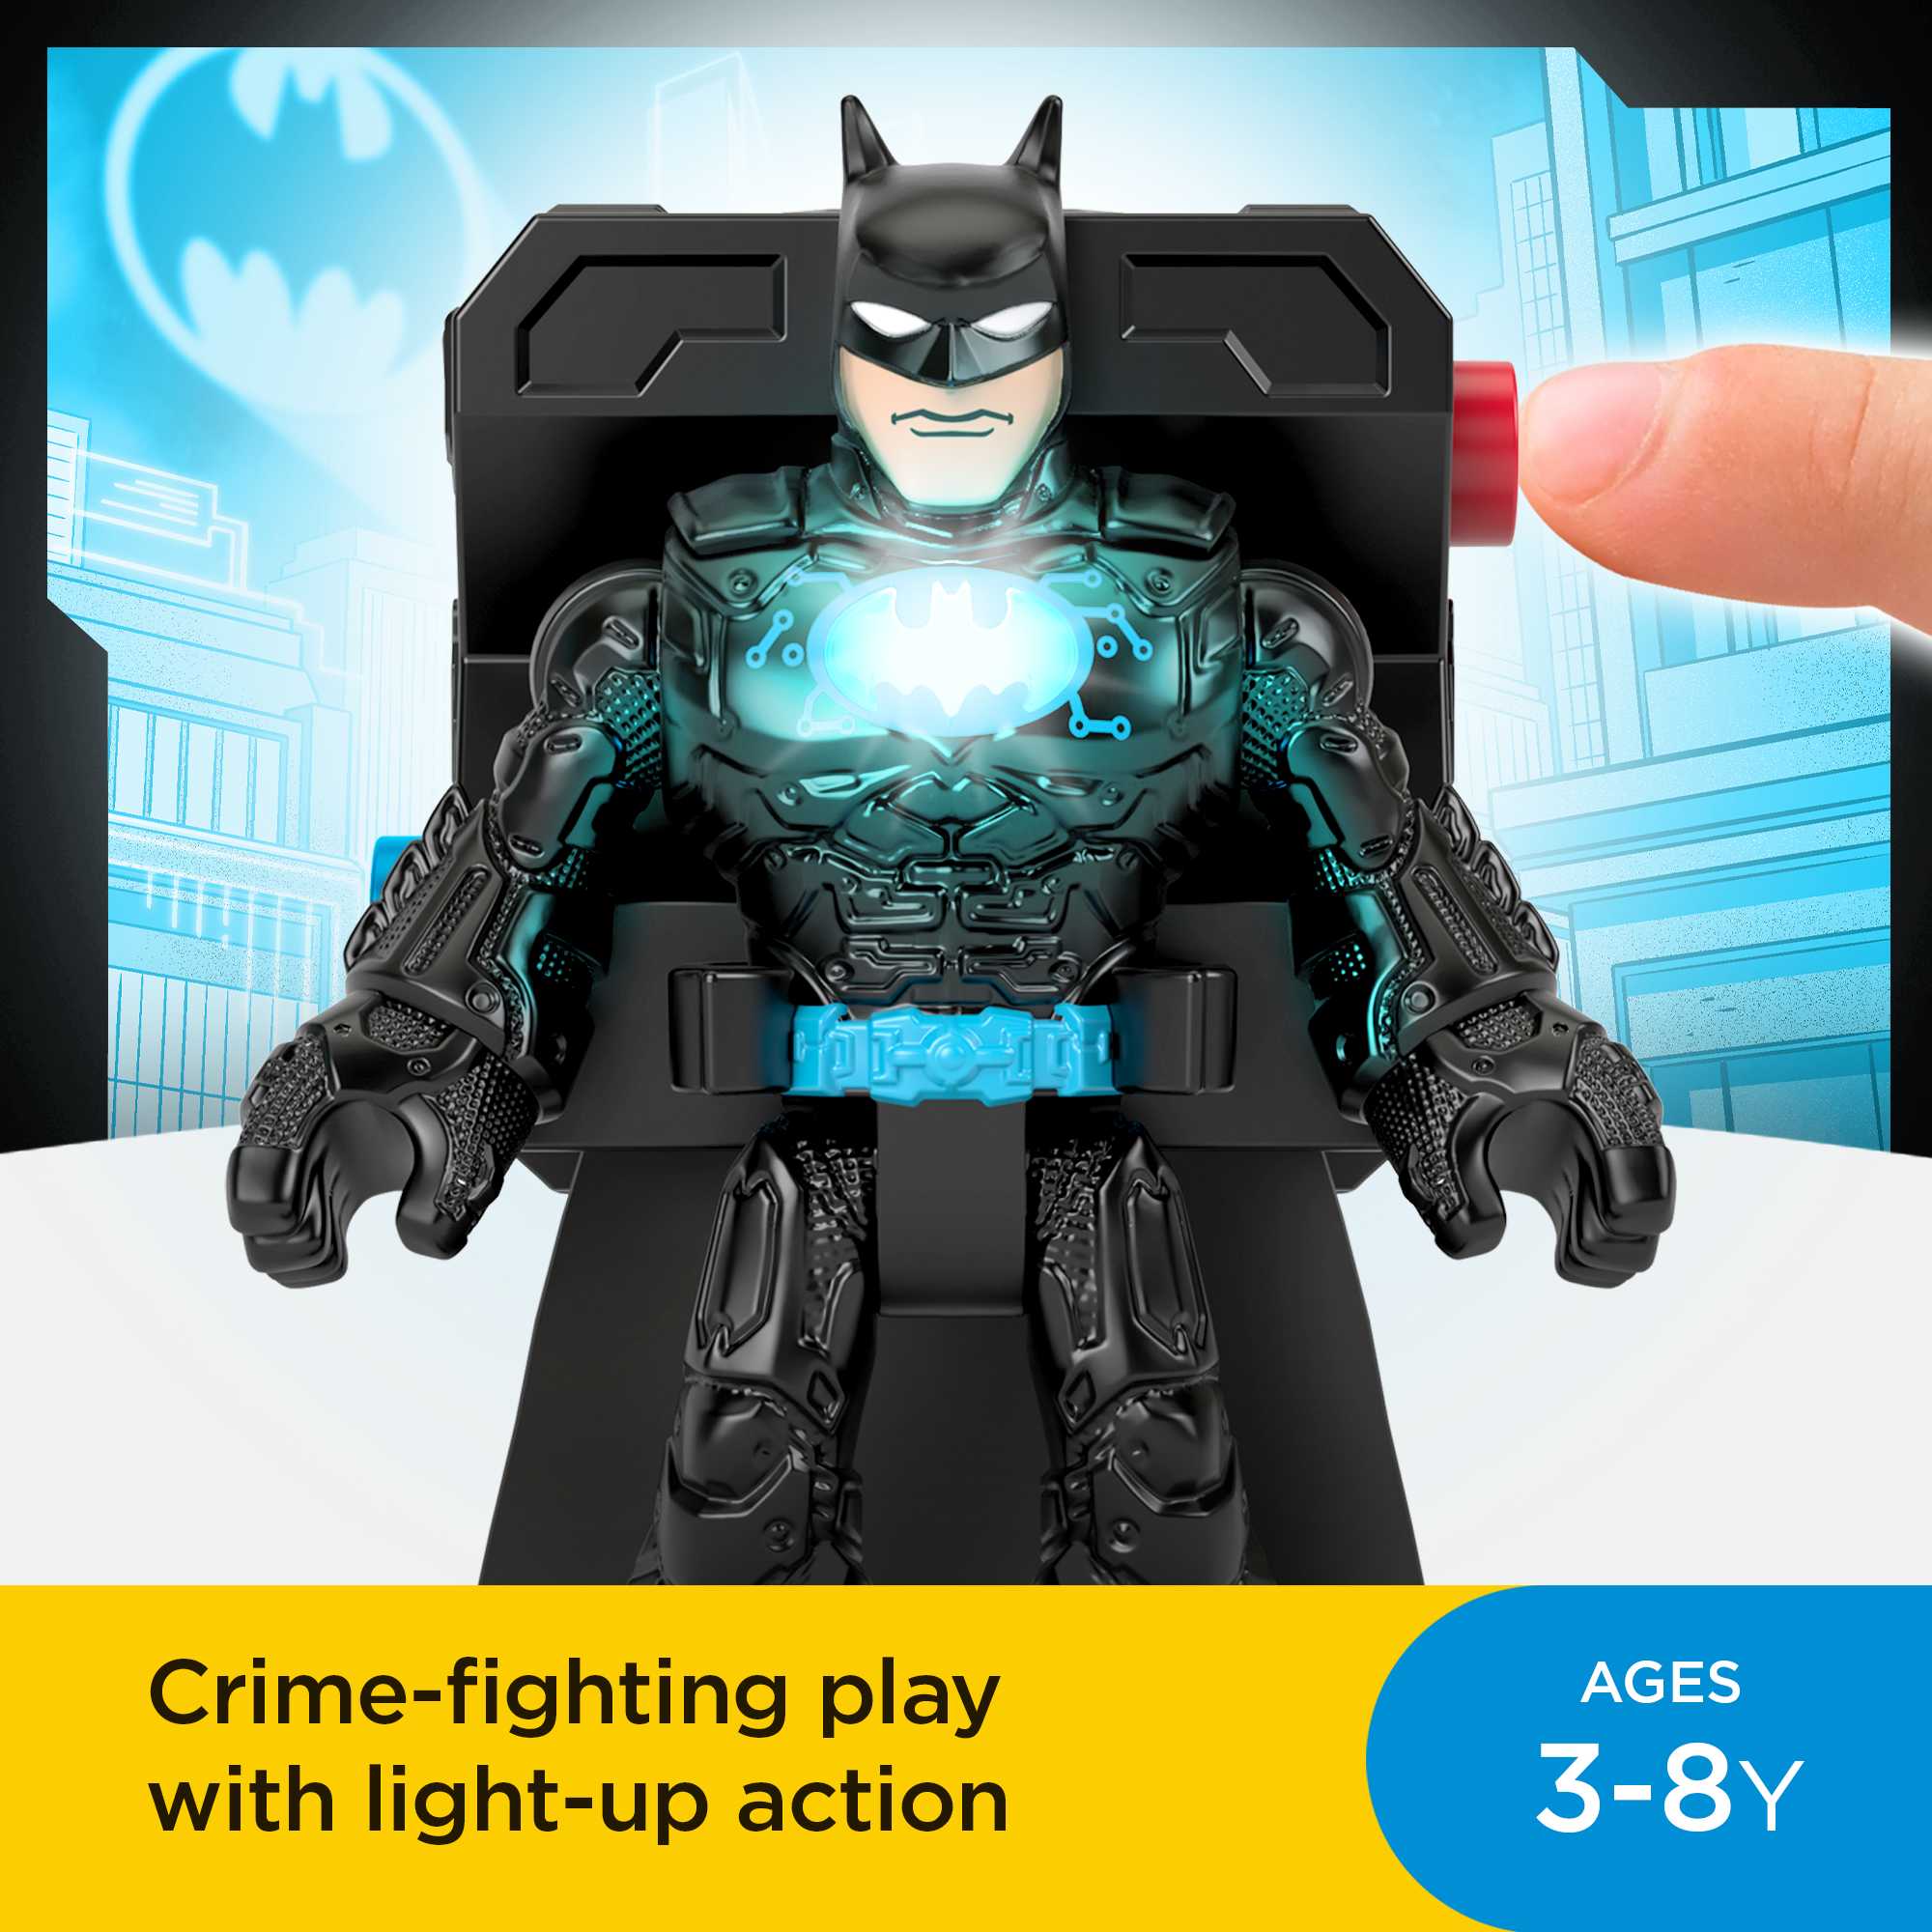 Imaginext Dc Super Friends Bat-Tech Multi-Pack | Mattel